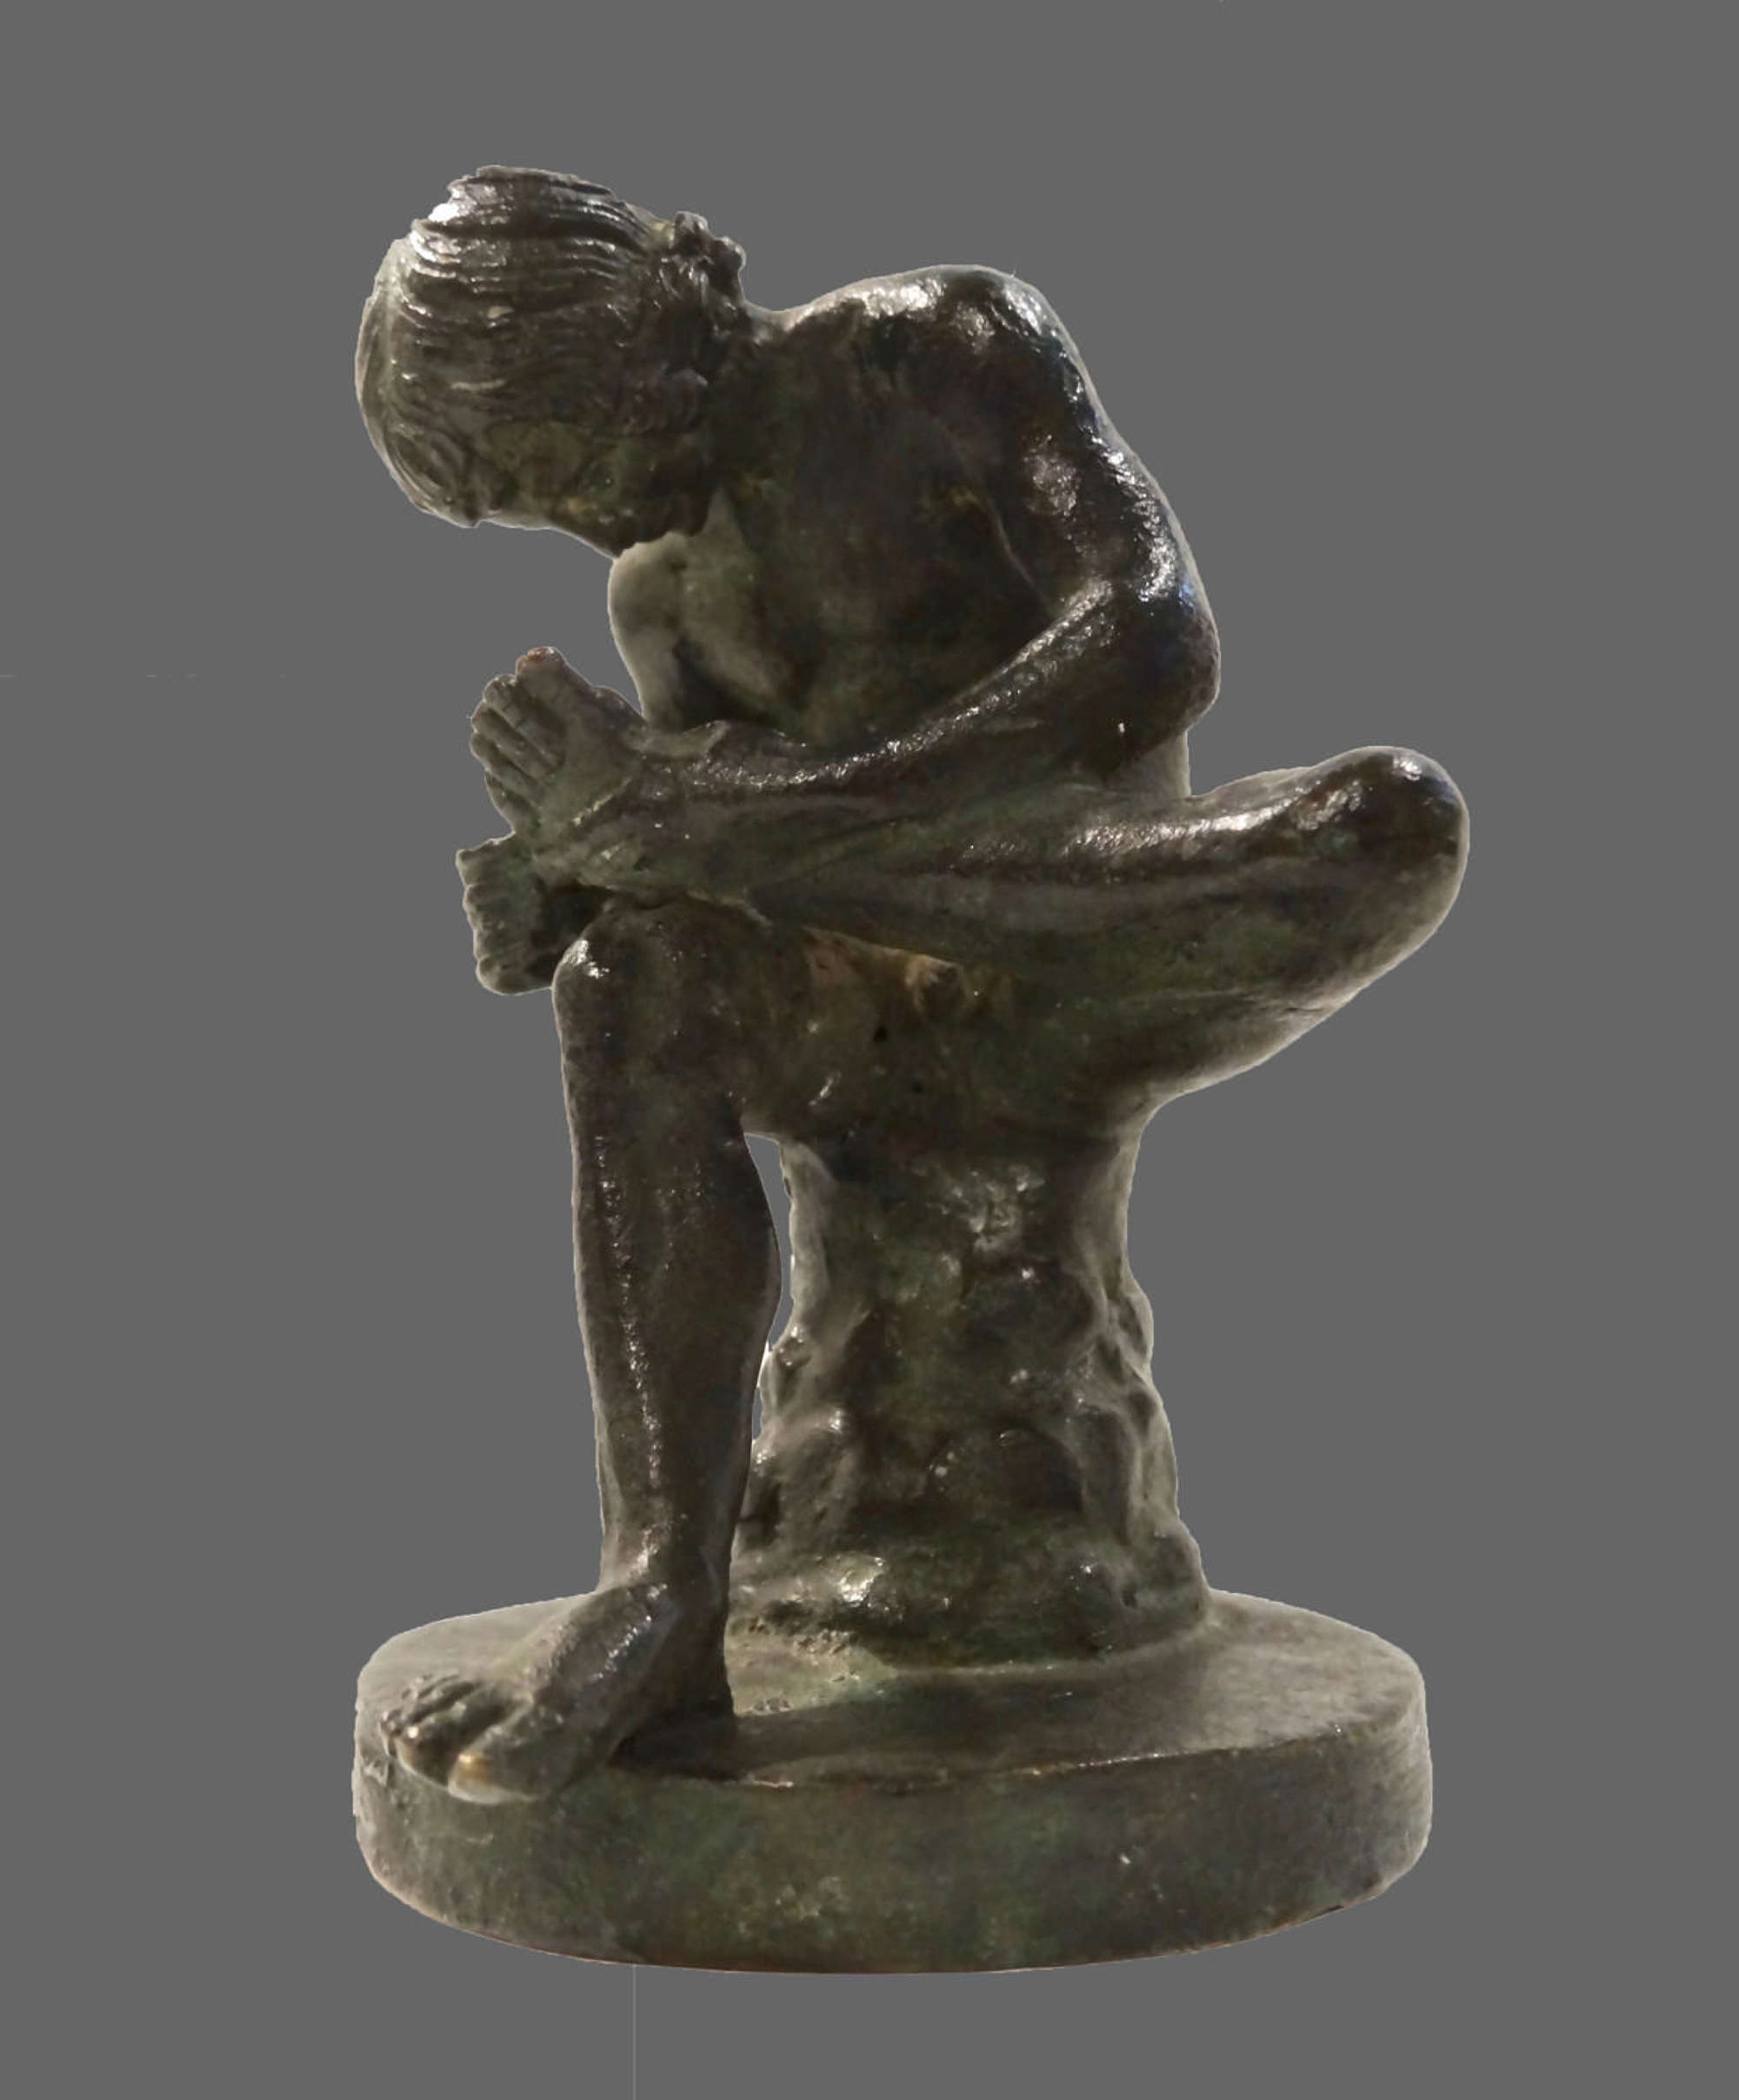 Small 19th century figure of Spinario